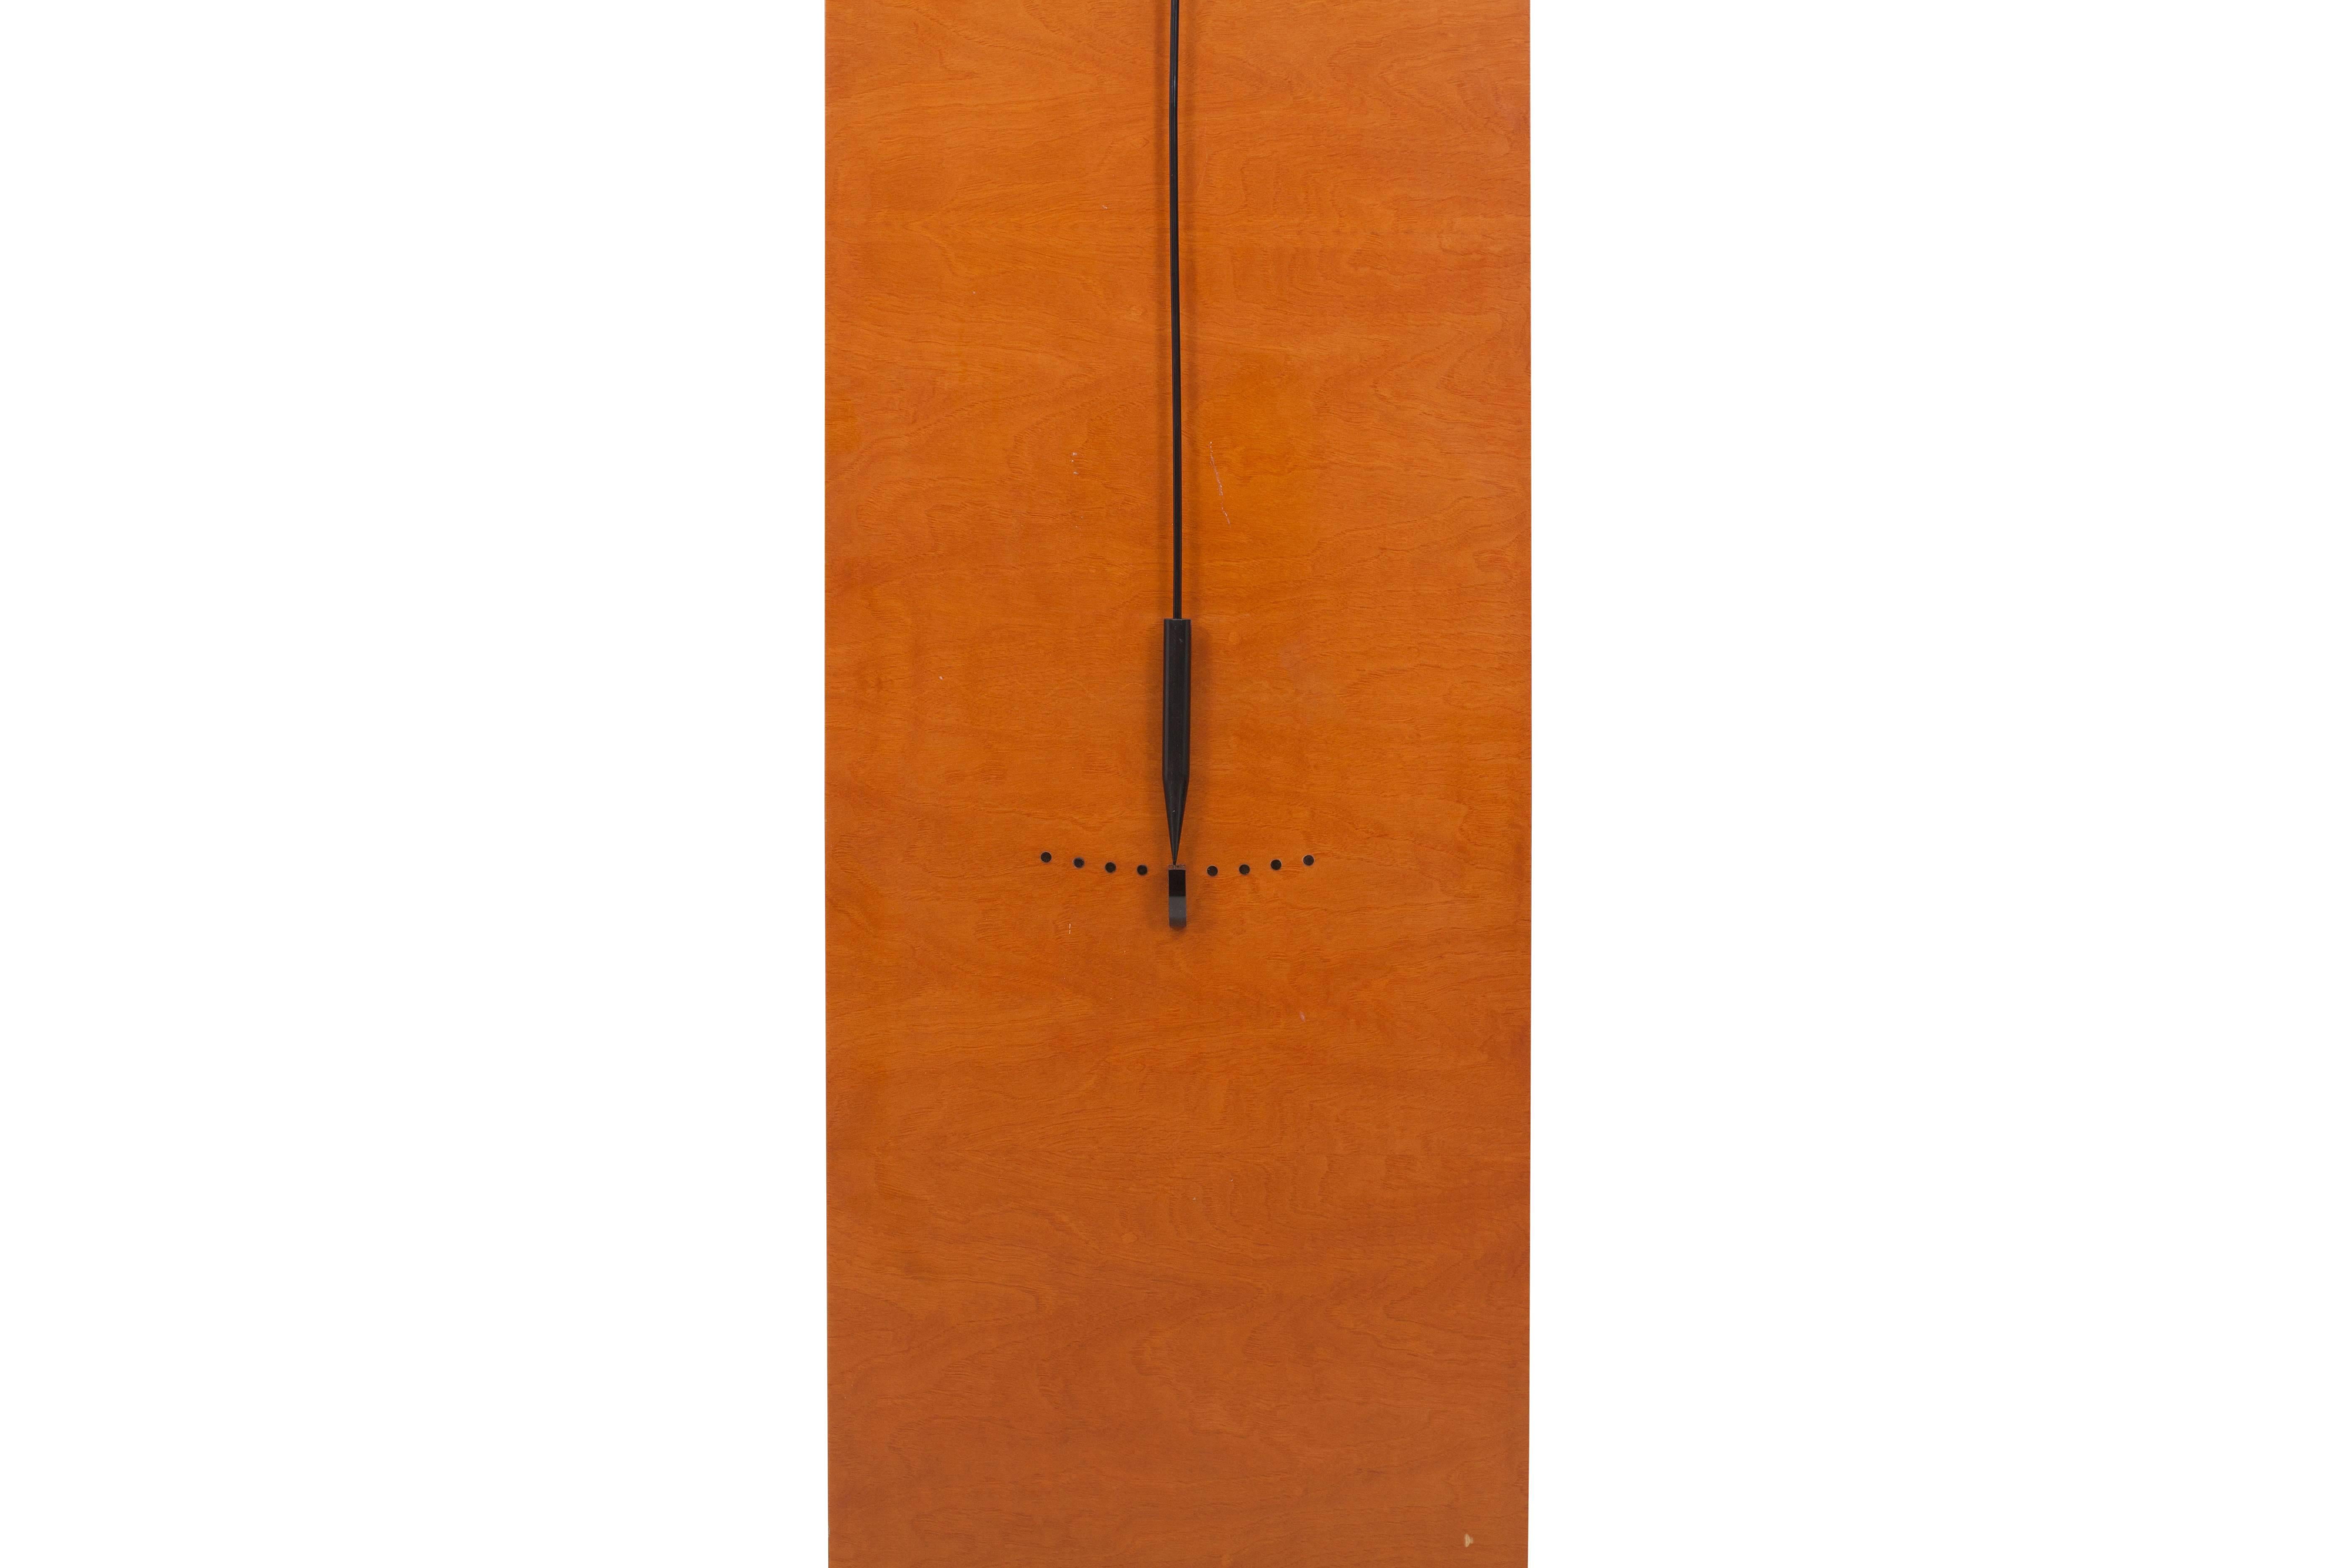 Spanish Depared Longcase Clock by Jaime Tresserra